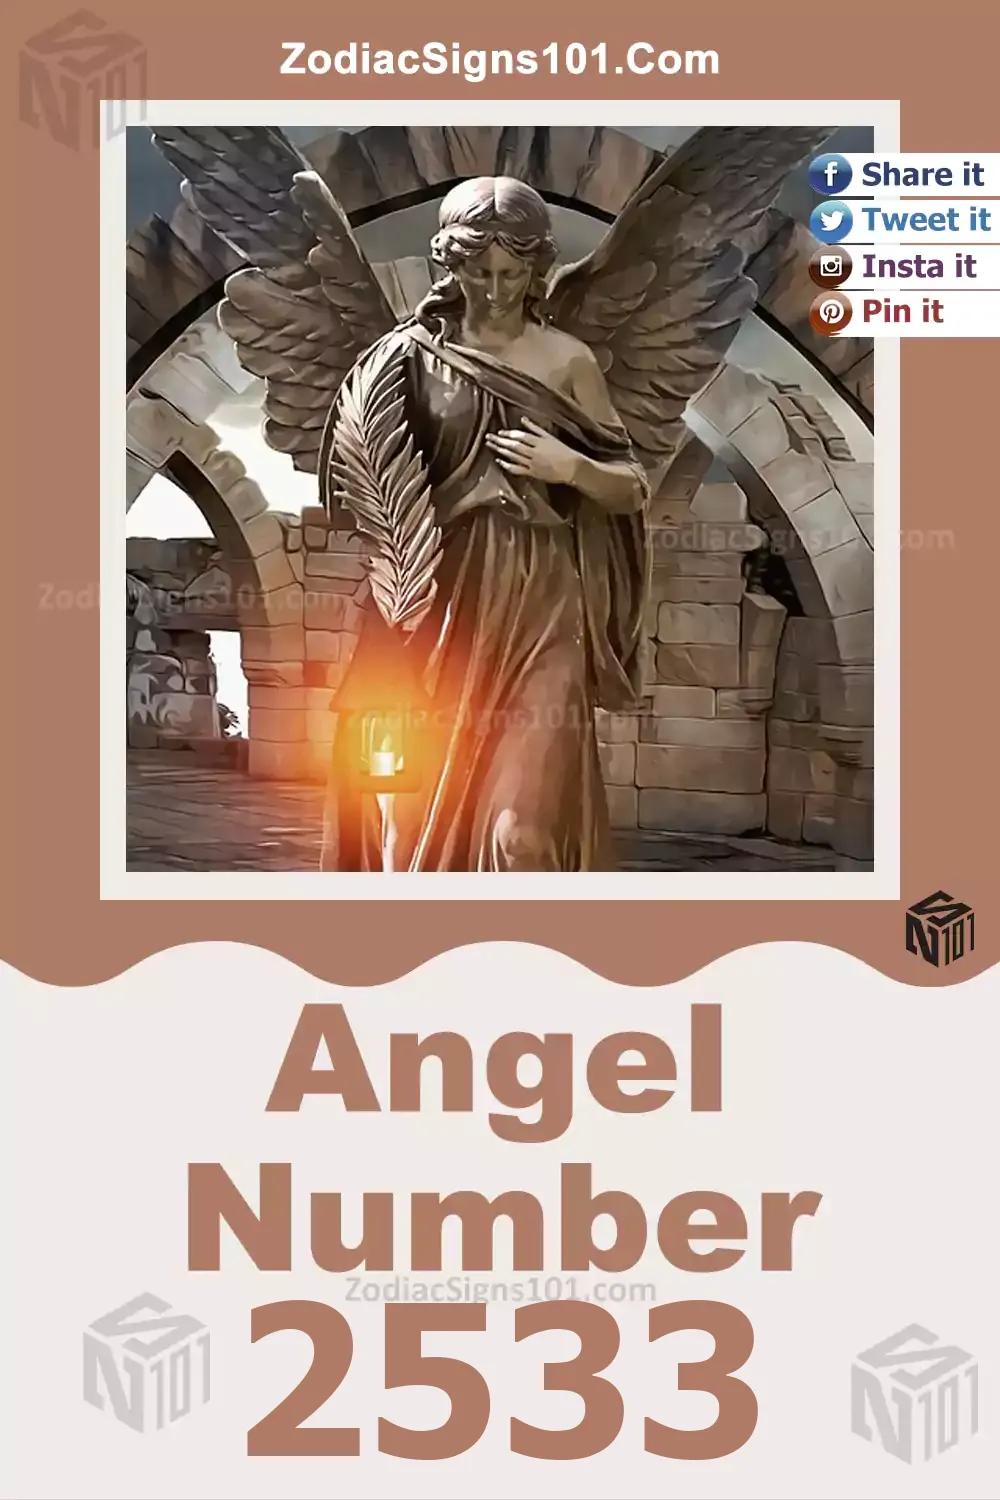 2533-Angel-Number-Meaning.jpg